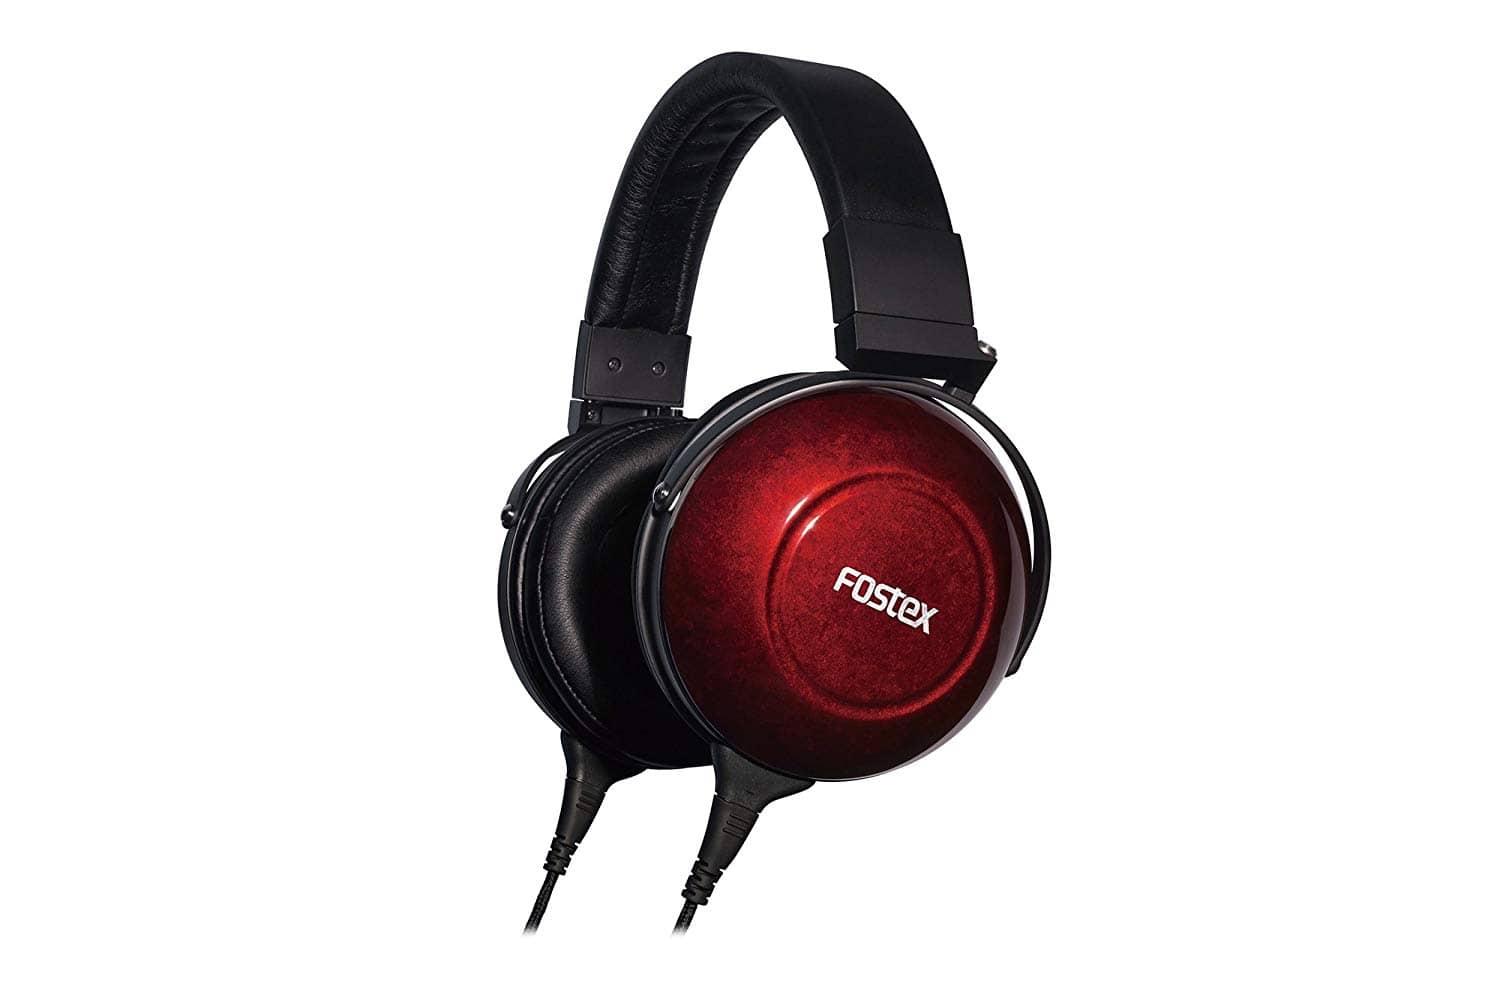 Fostex TH-900Mk2 closed back headphones